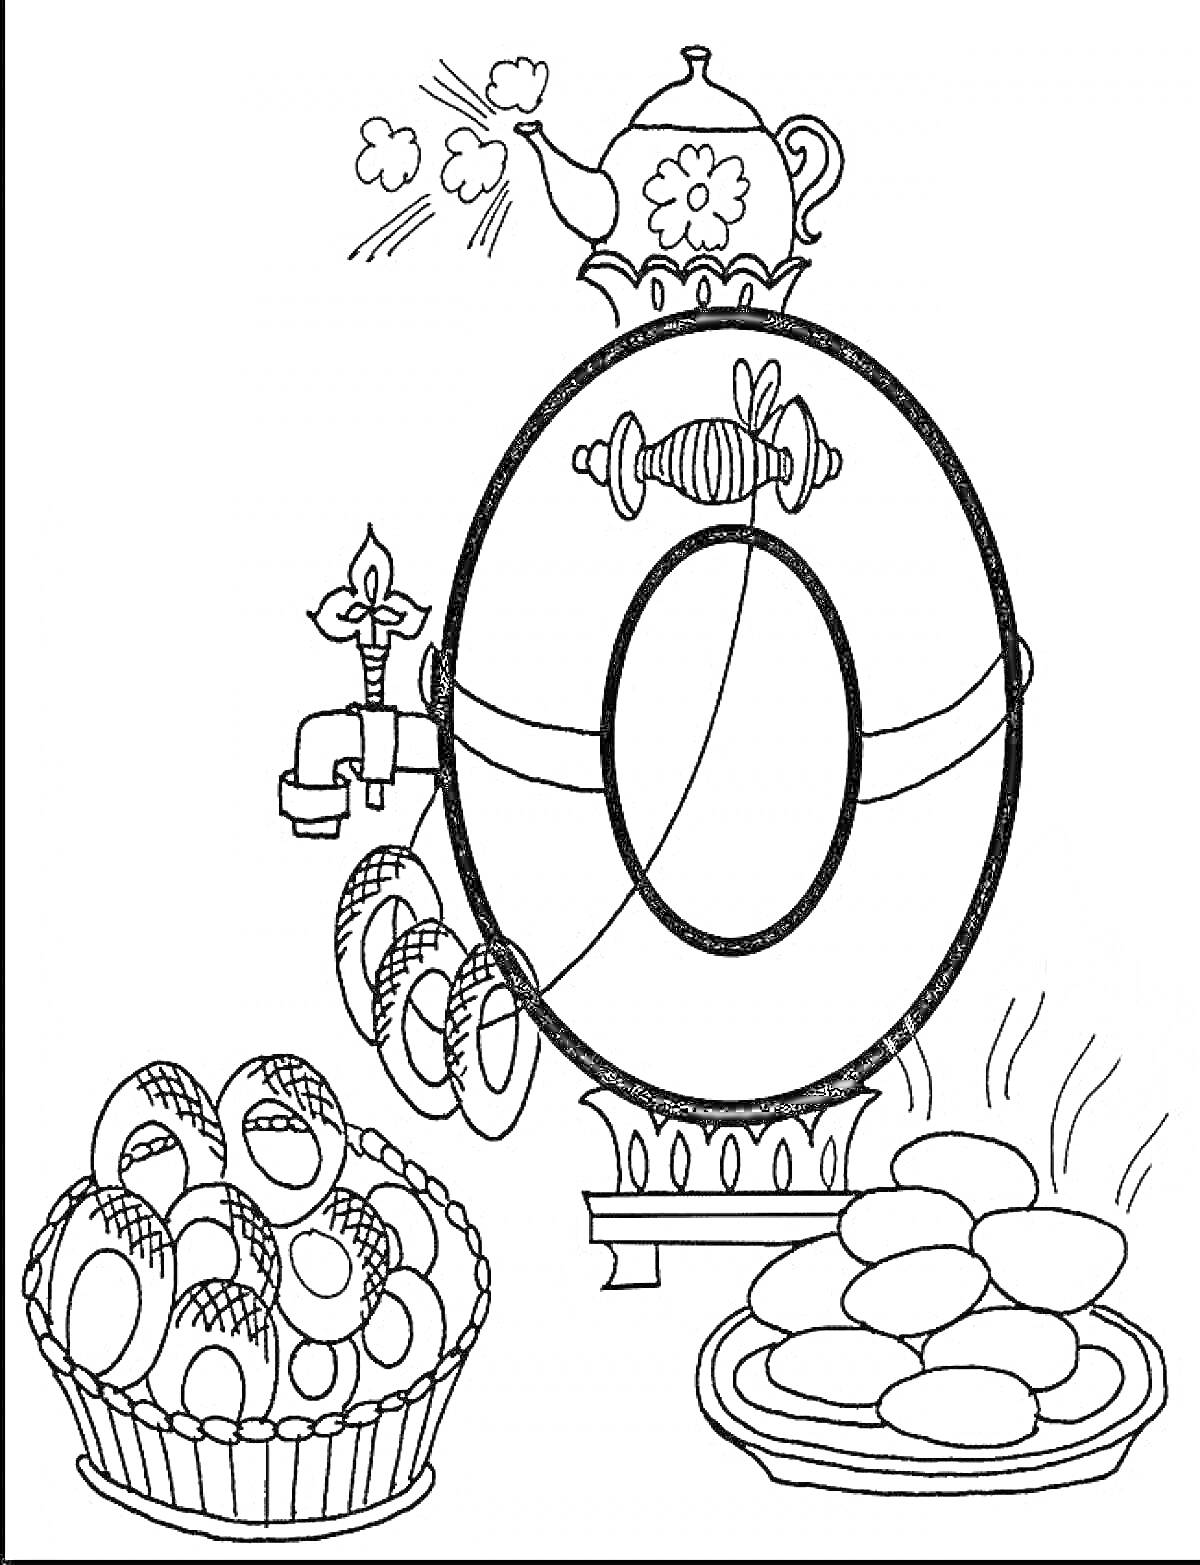 На раскраске изображено: Цифра 0, Самовар, Корзина, Яйца, Пар, Булочка